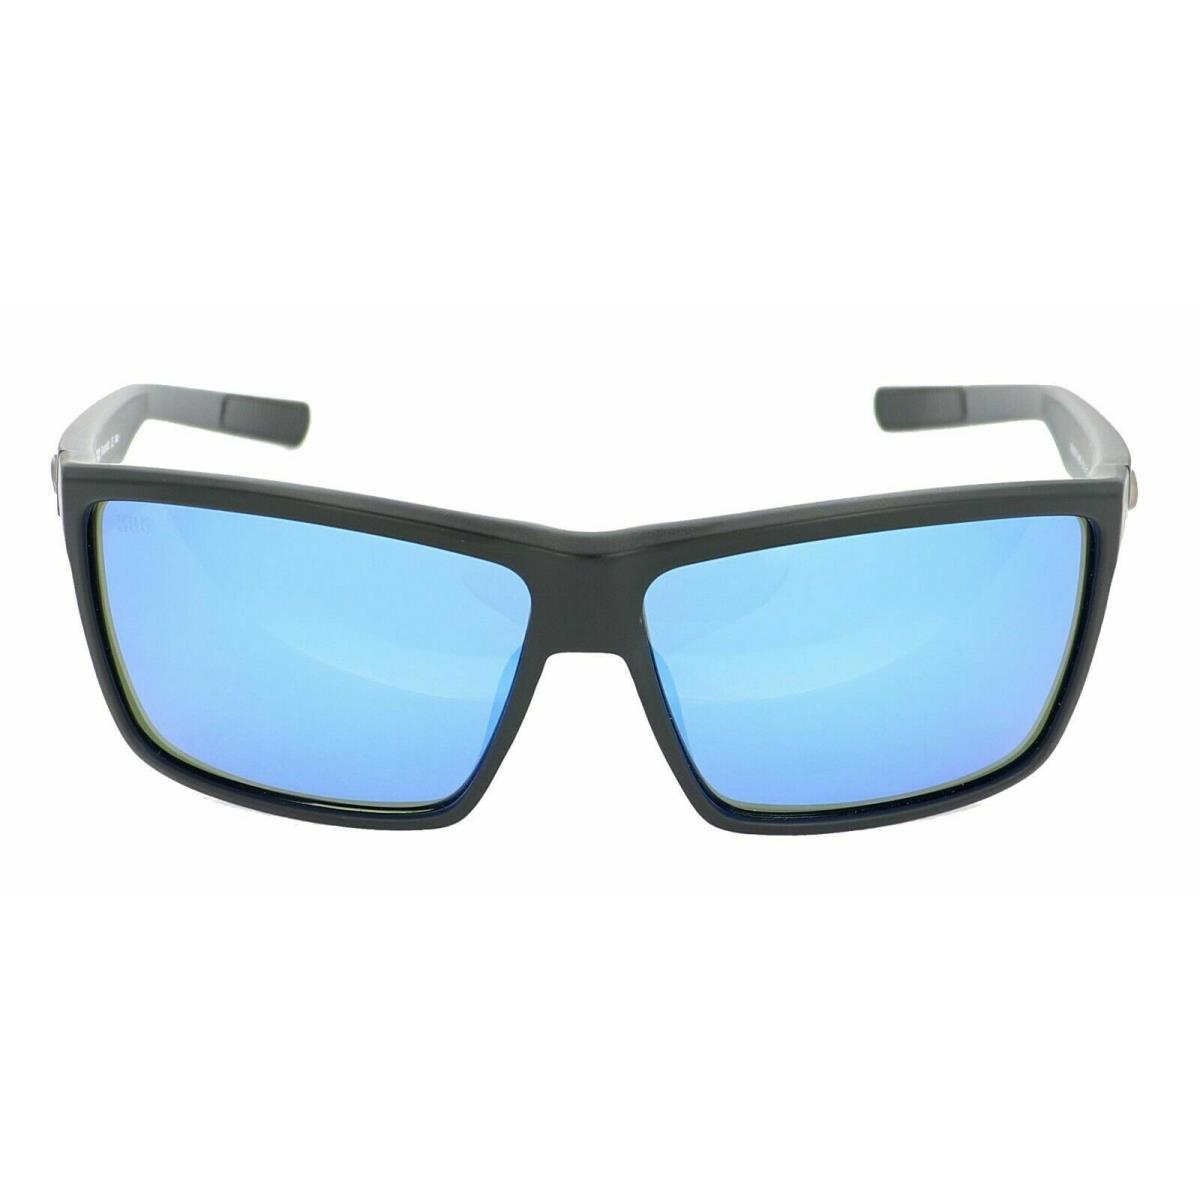 Costa Del Mar Rinconcito Men`s Polarized Blue Mirror Sunglasses Ric 11 Obmglp - Black Frame, Blue Lens, Matte Black / Blue Mirror Manufacturer